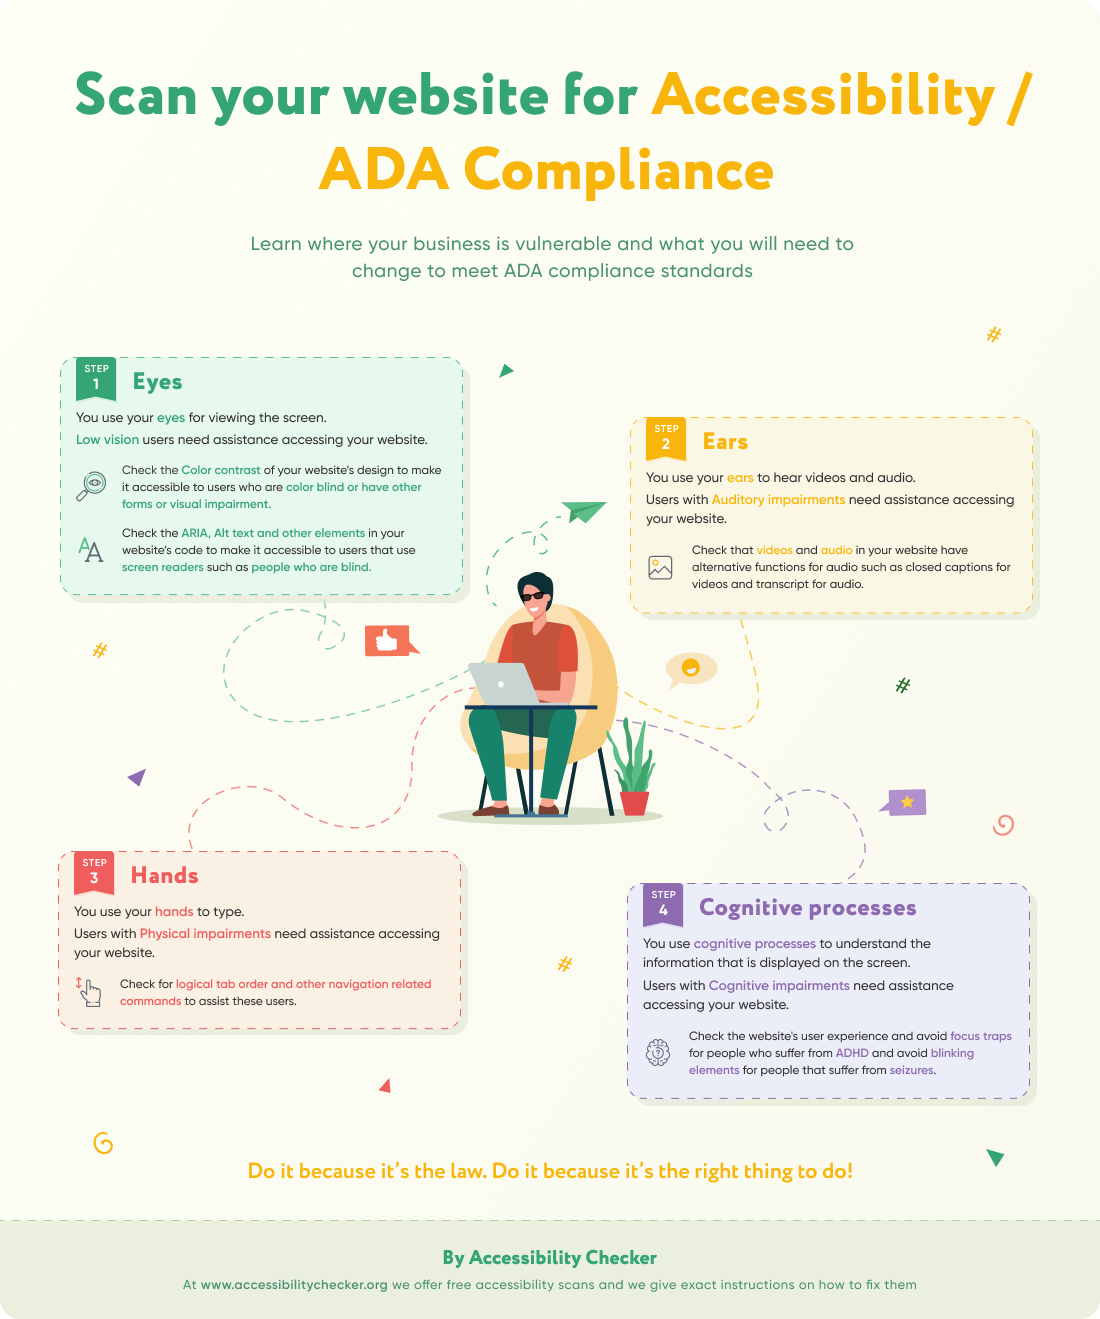 ADA Compliance for websites